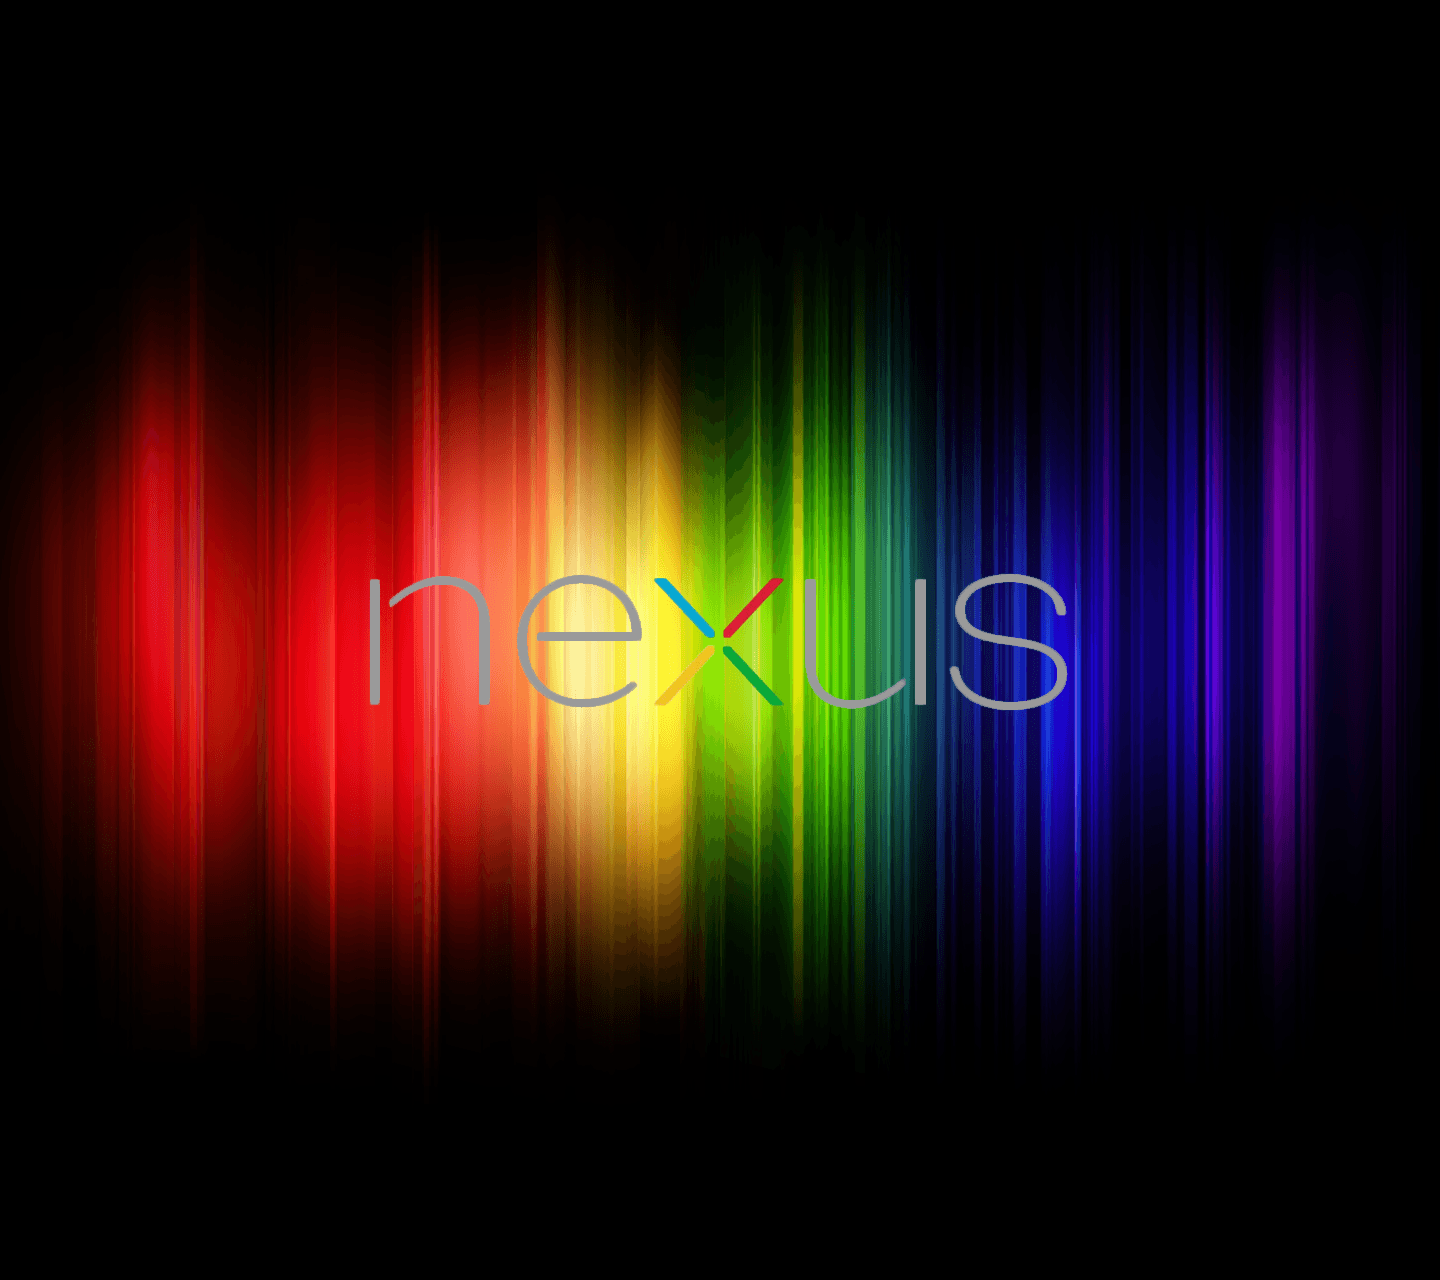 Google Nexus Background, wallpaper, Google Nexus Background HD